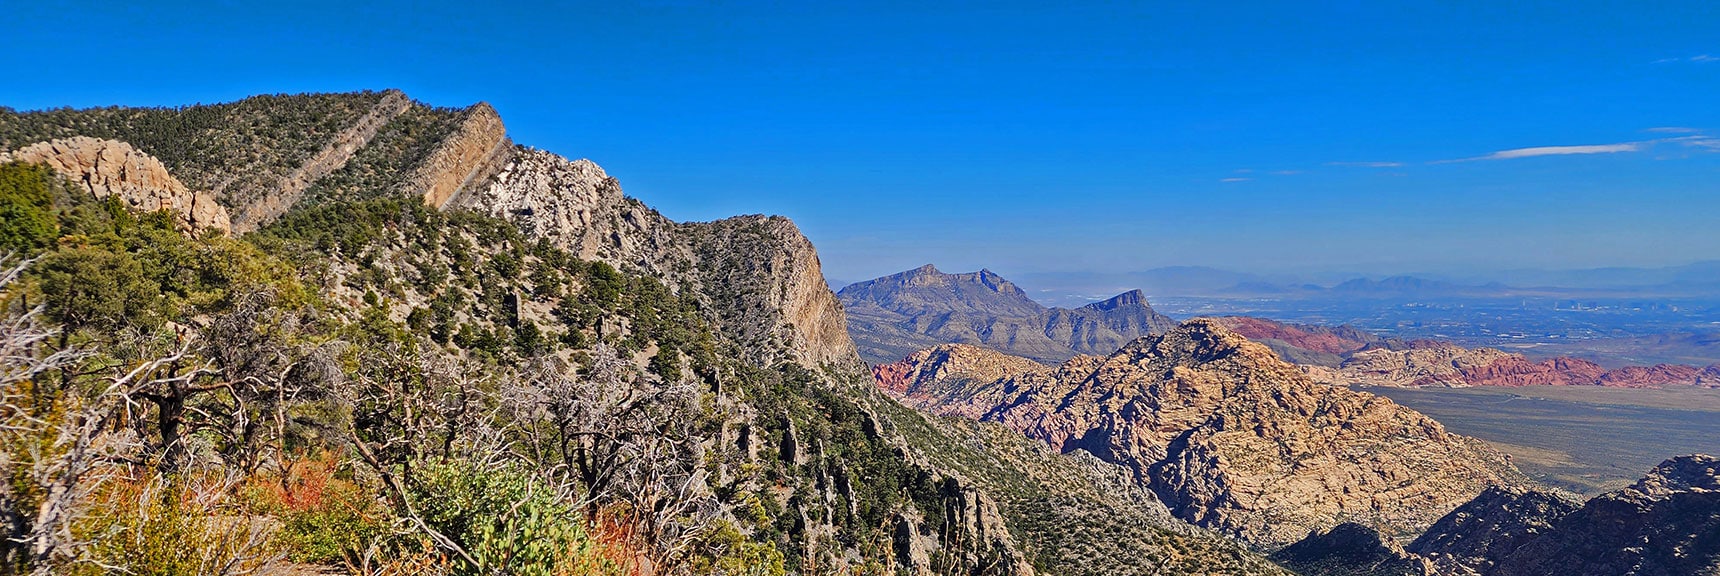 White Rock Mt.; Damsel Peak; Turtlehead Peak and Calico Hills in View | Switchback Spring Pinnacle | Wilson Ridge | Lovell Canyon, Nevada